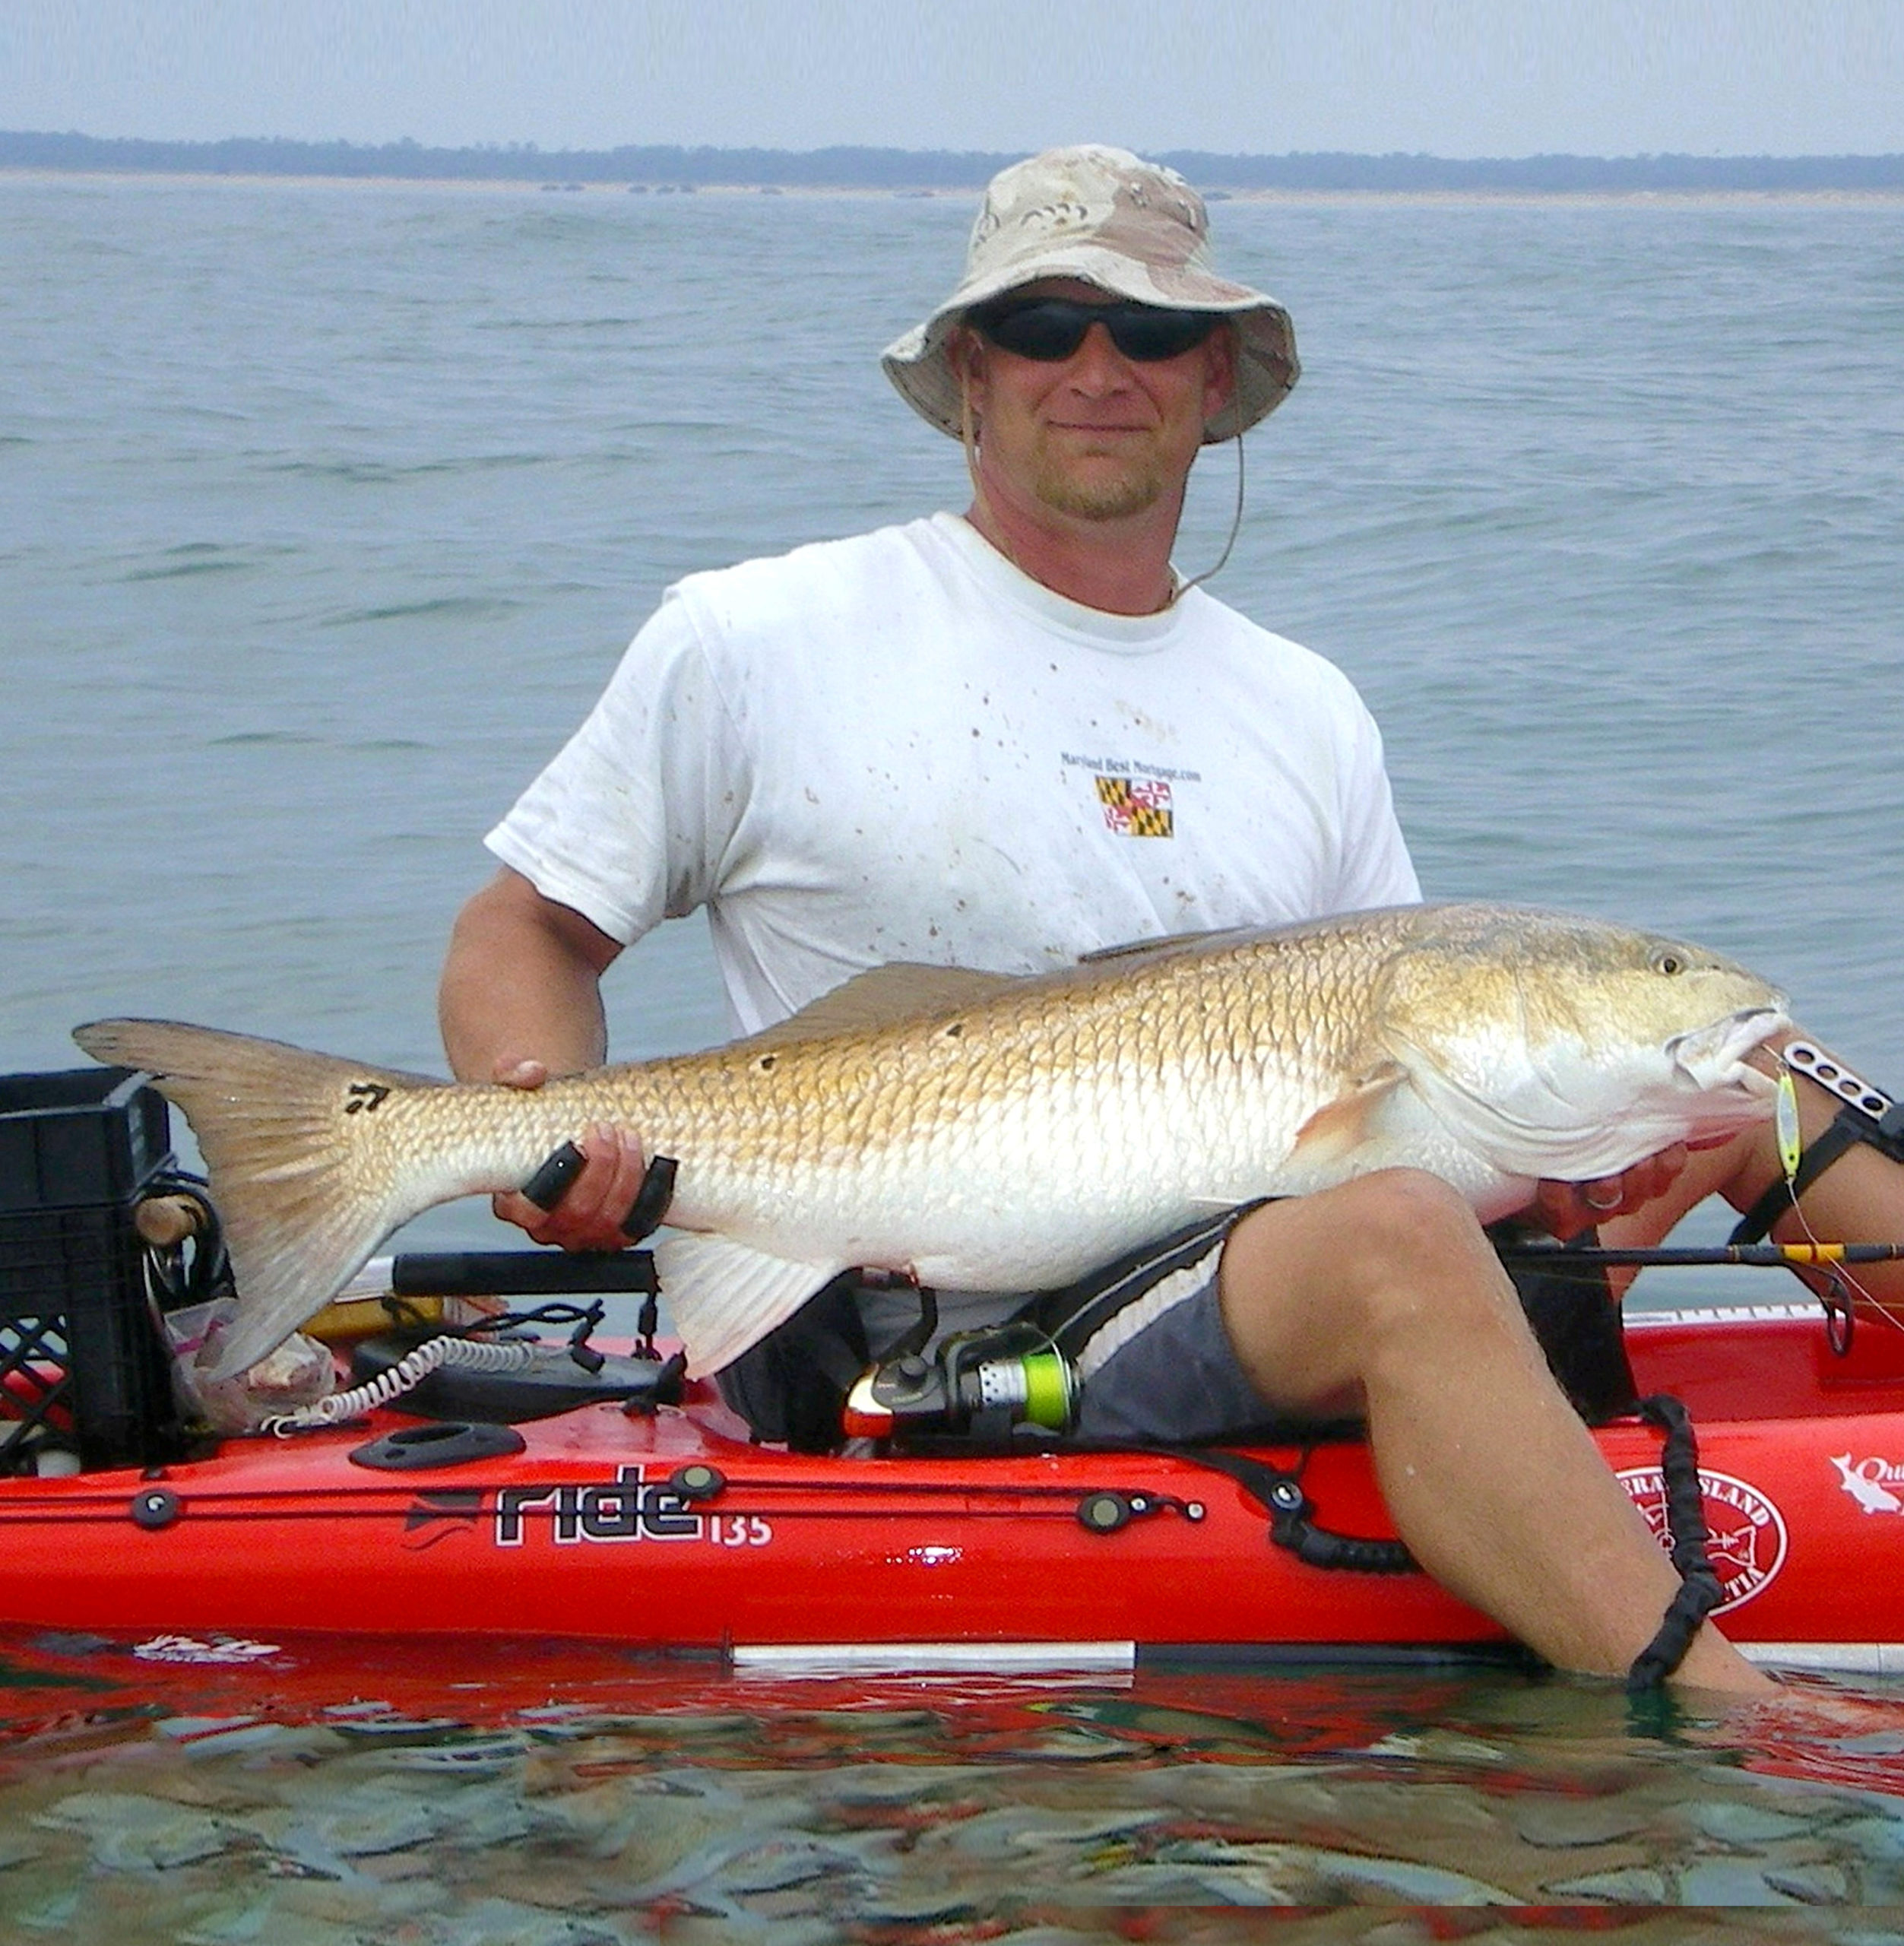 Kayaks provide great advantages for North Carolina fishing